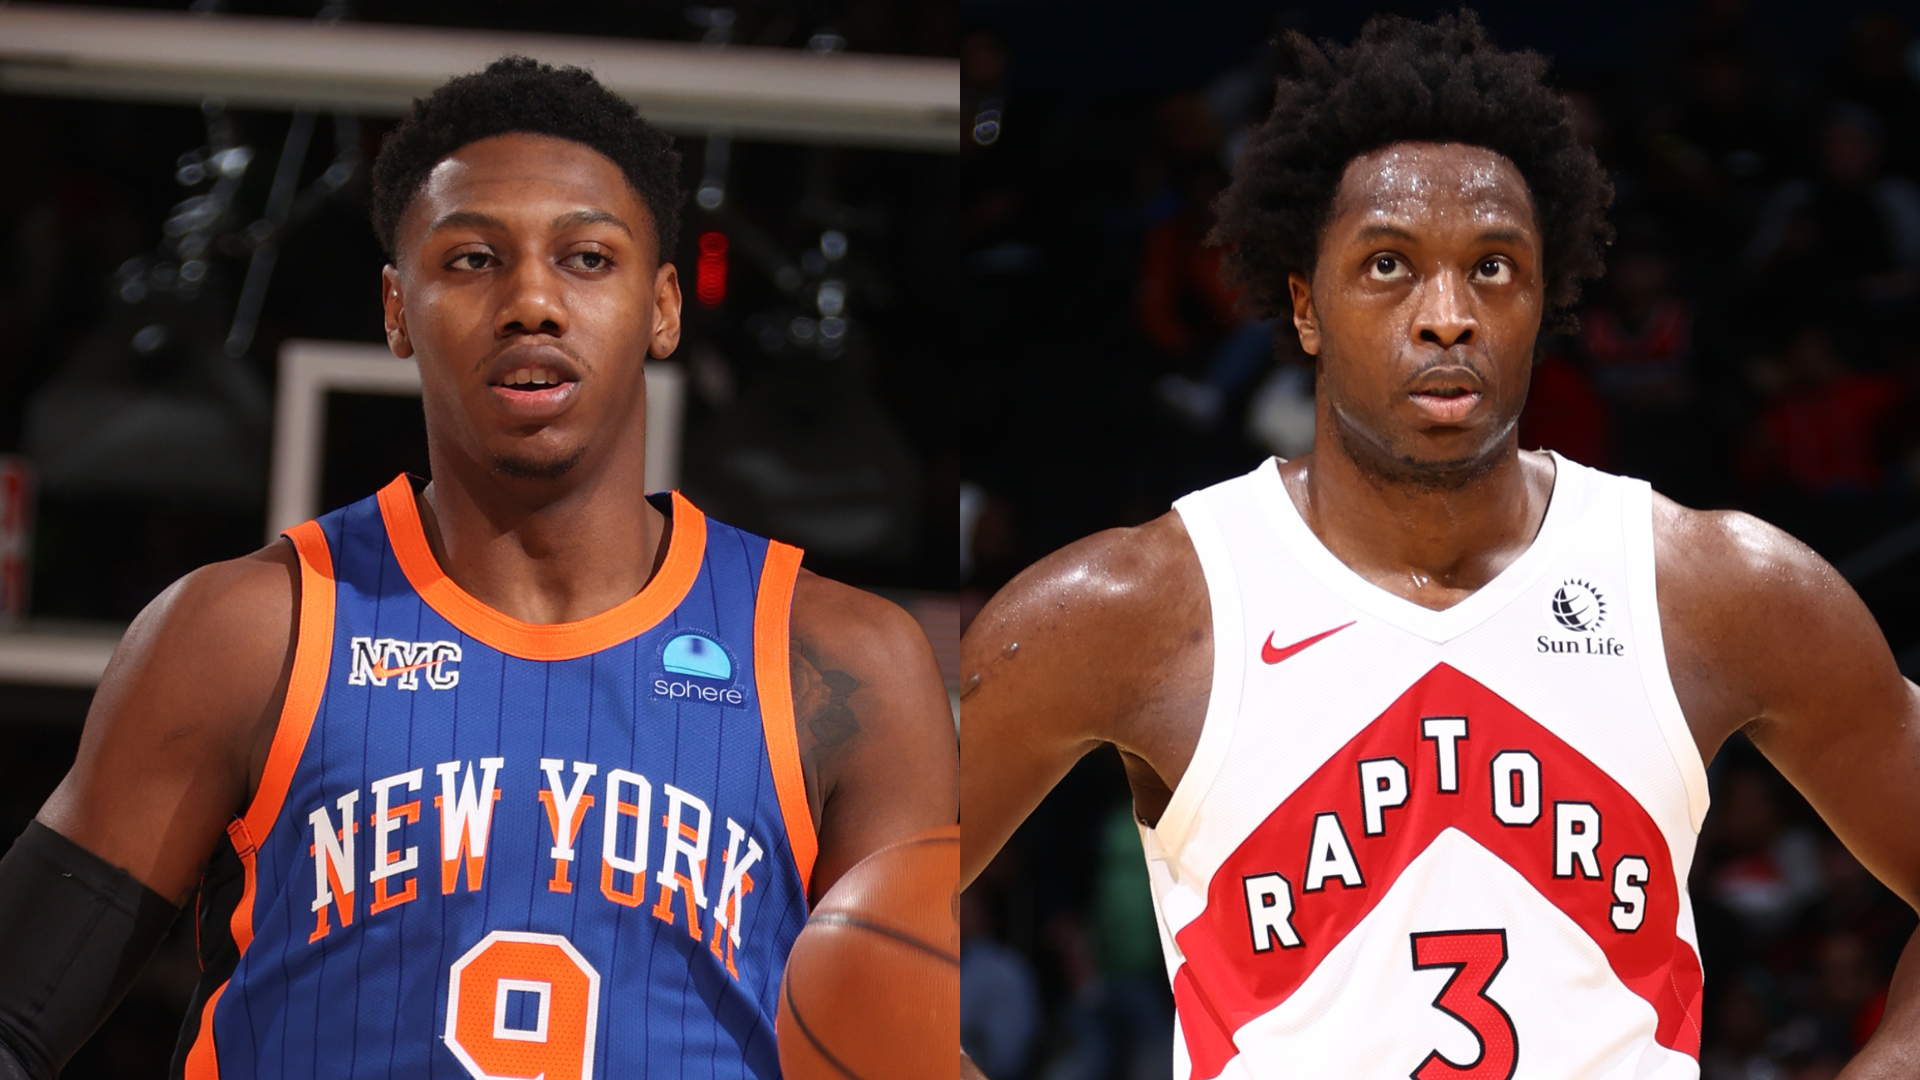 RJ Barrett to Raptors, Anunoby, Achiuwa to Knicks